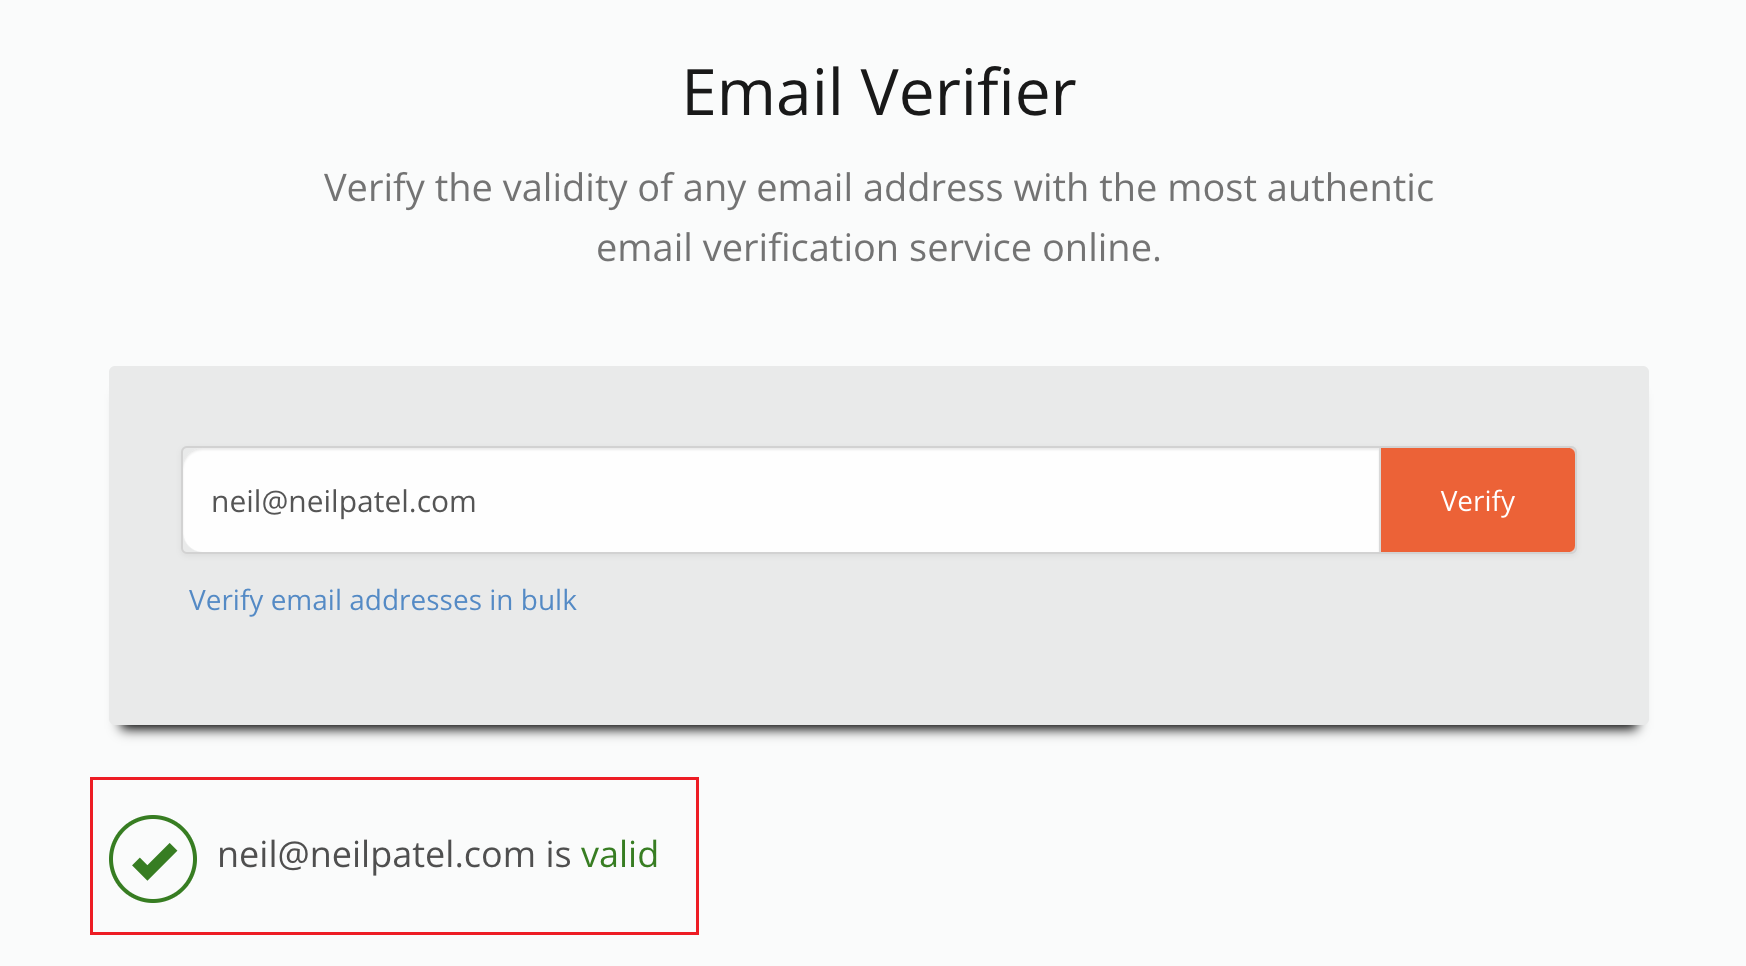 email verifier